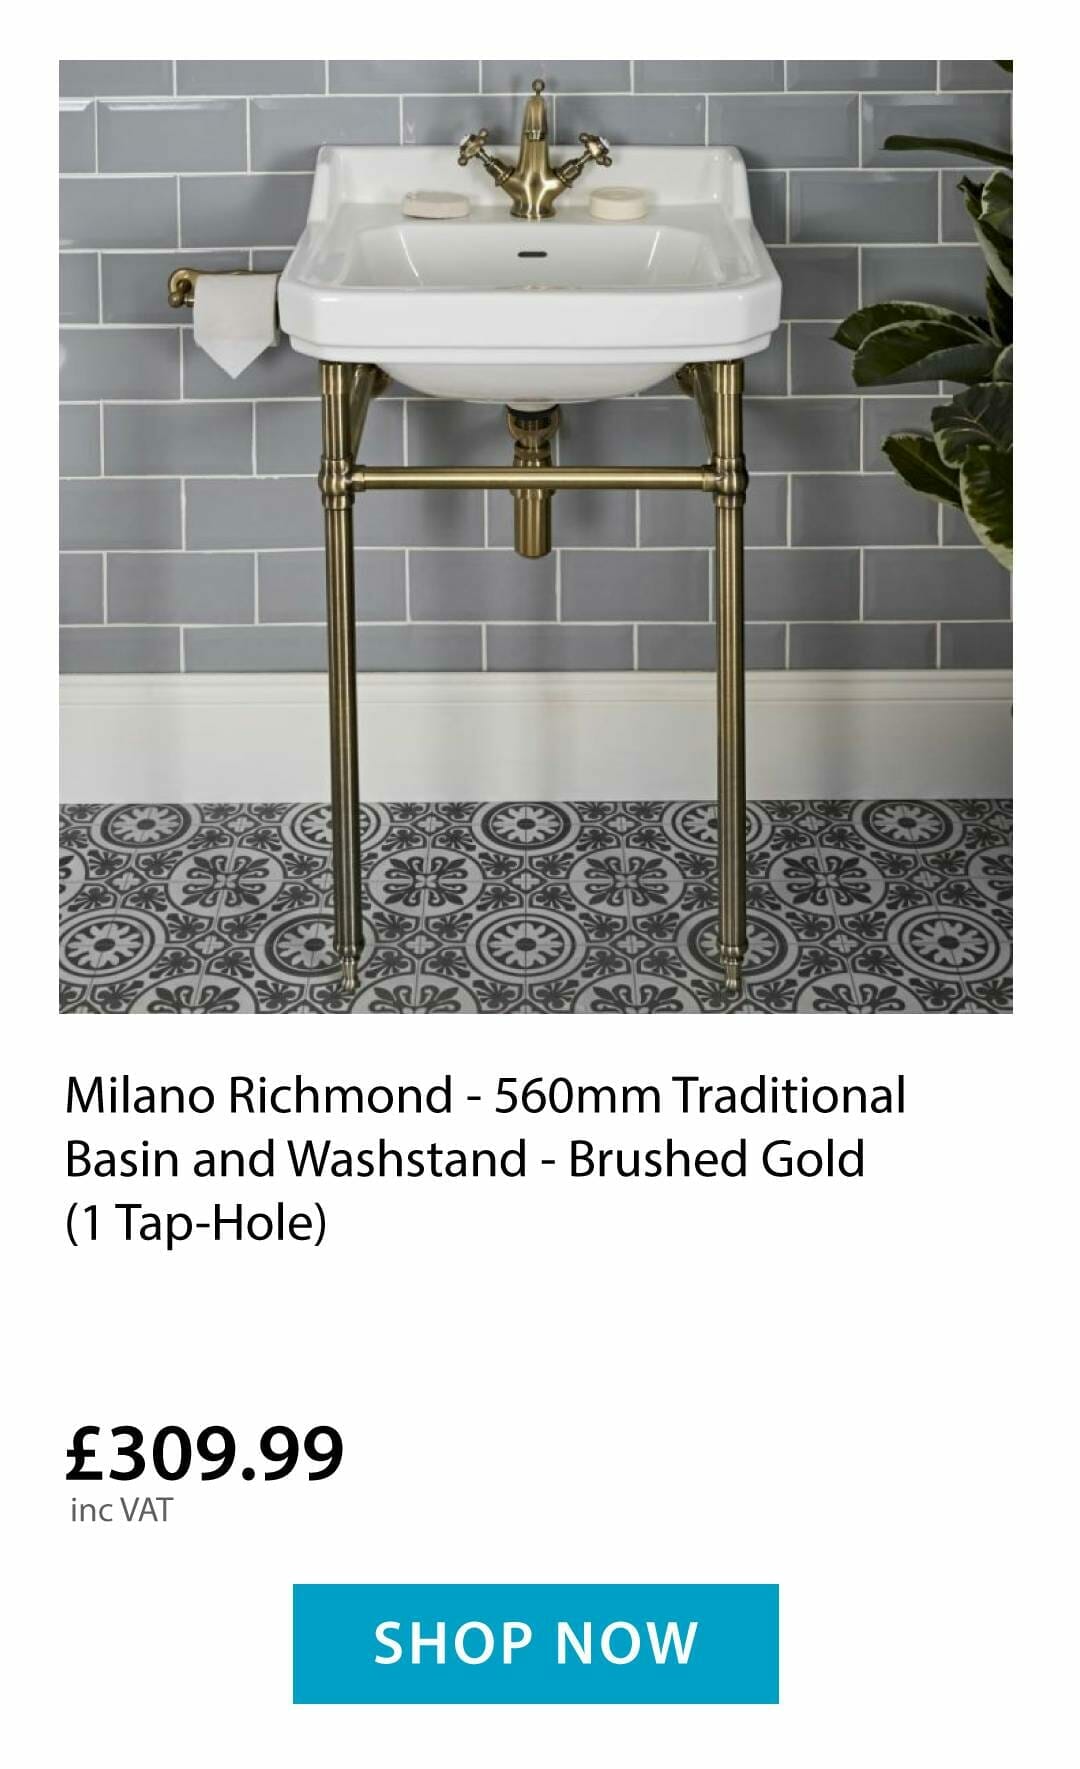 Milano Richmond washstand 